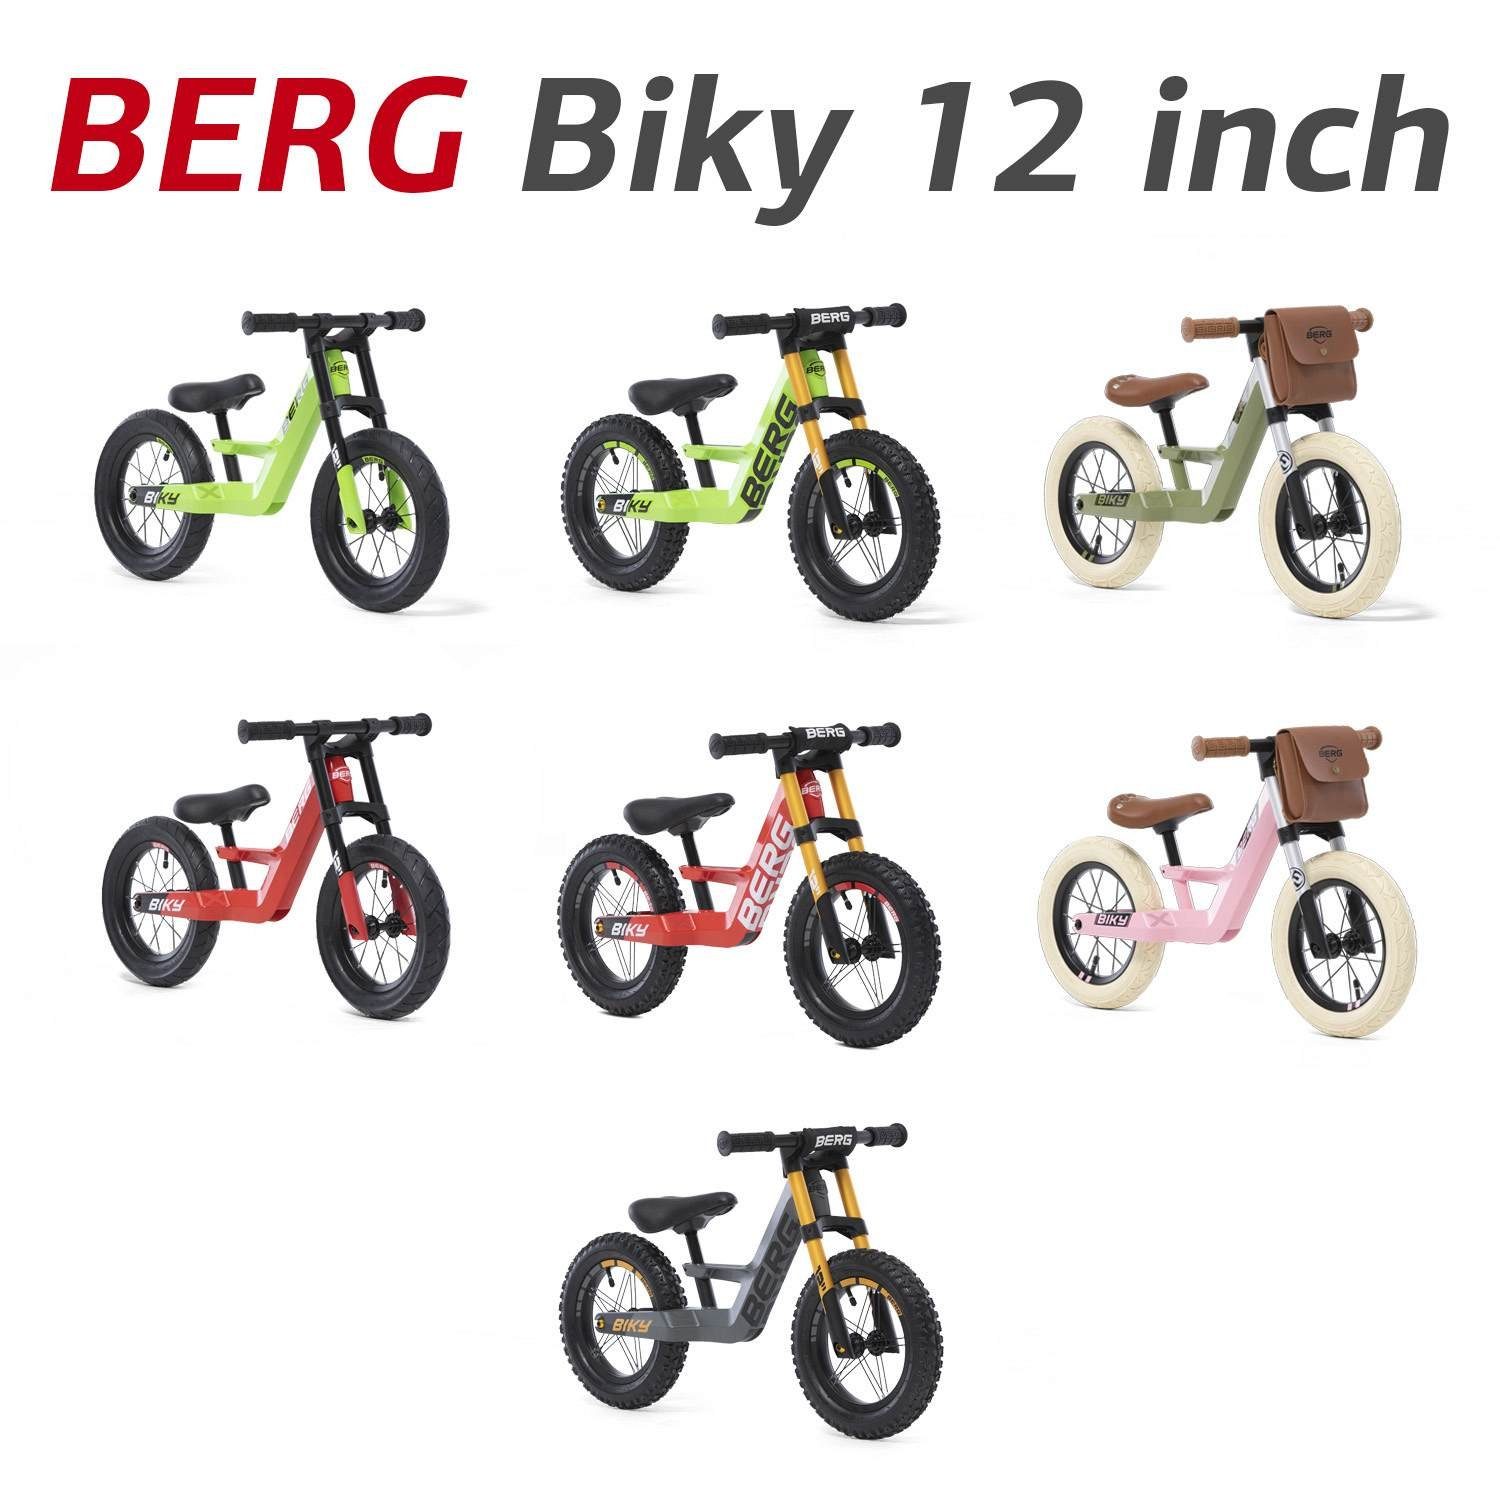 rot City Berg 12" Go-Kart Red Laufrad BERG Biky